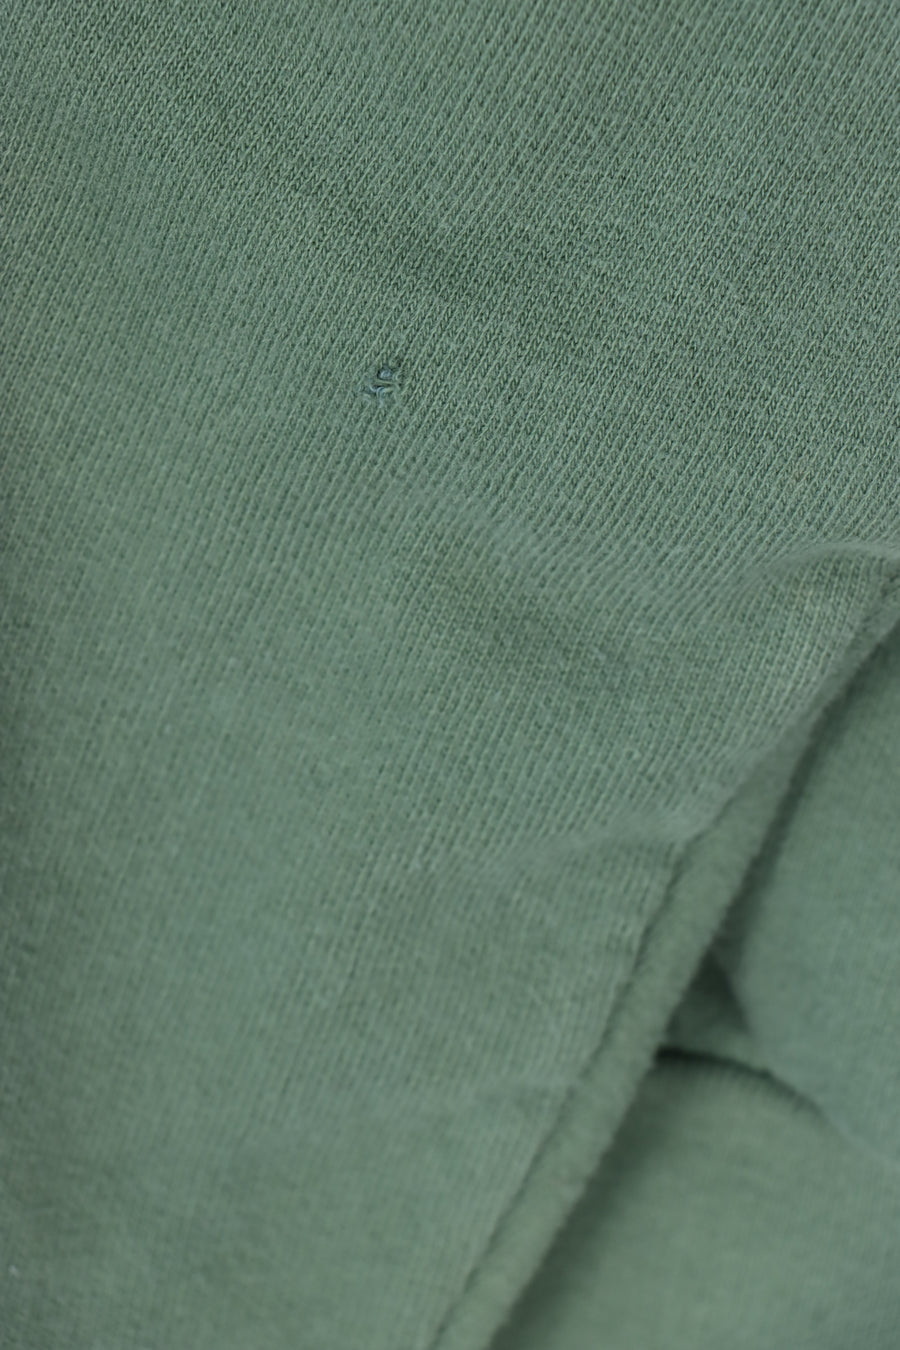 CHAPS RALPH LAUREN Green Embroidered Sweatshirt (XXL)